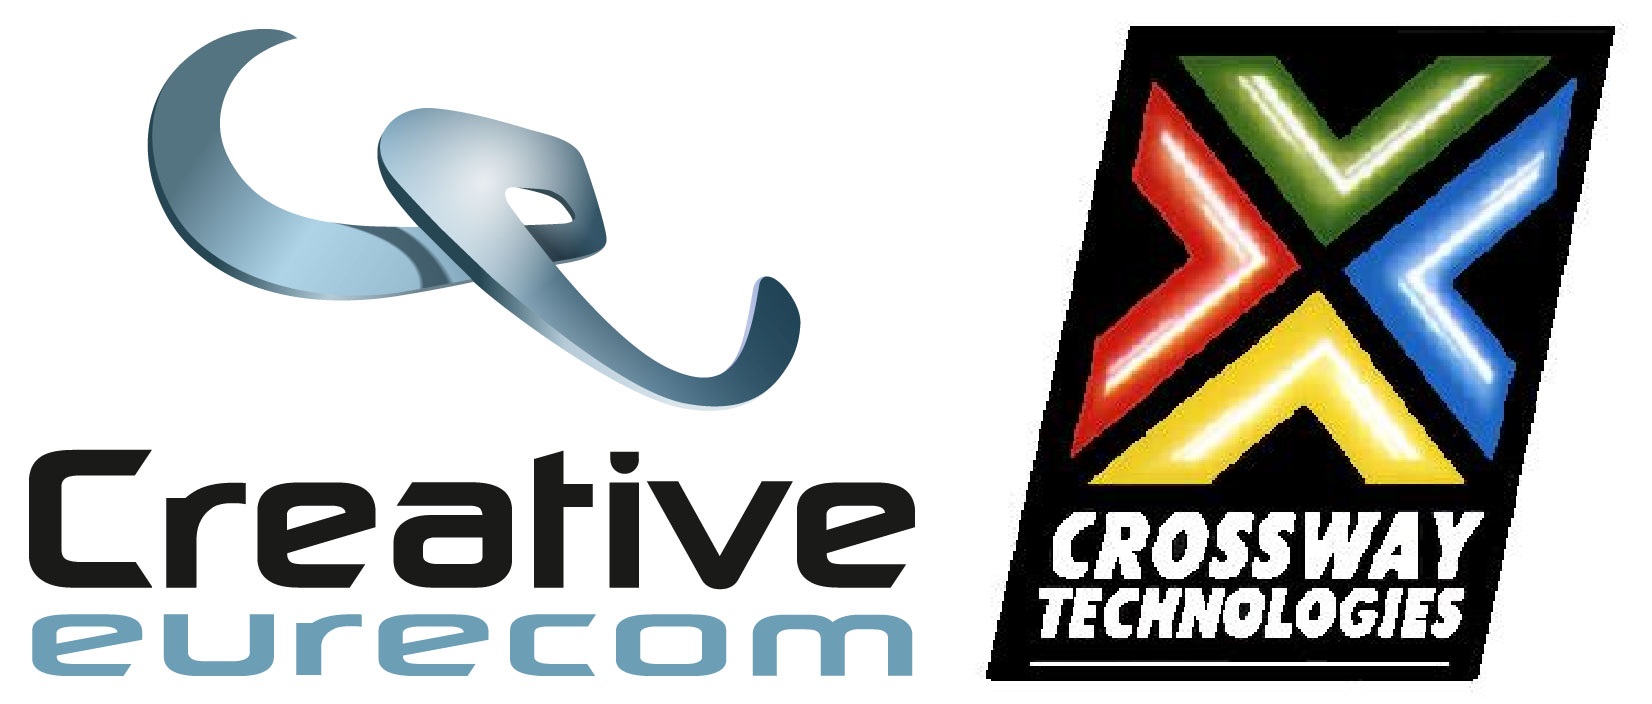 Logo Creative Eurecom - Crossway Technologies